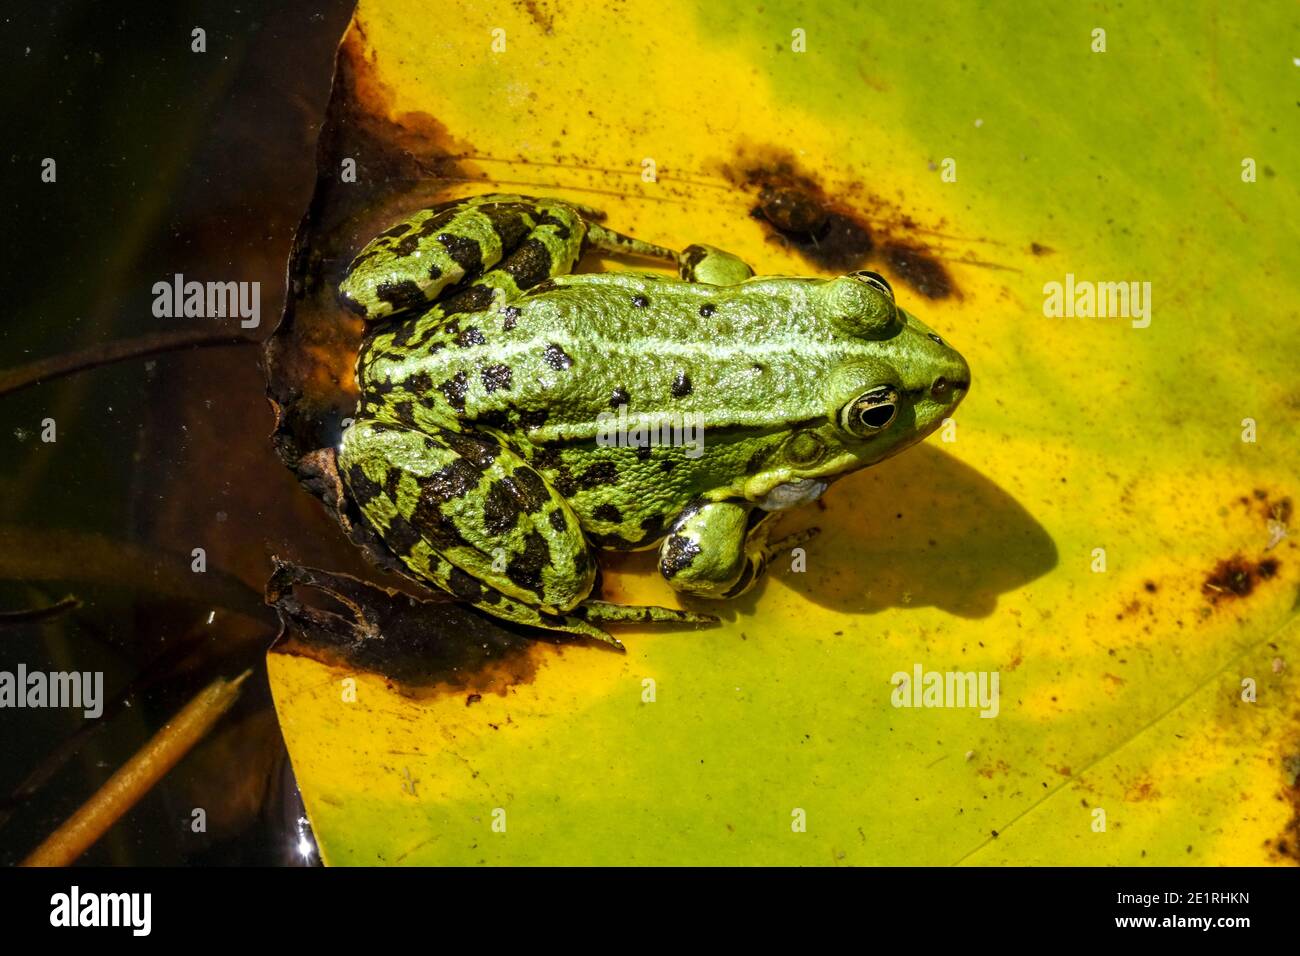 Marsh Frog, Pelophylax ridibundus or Rana ridibunda sitting on a leaf in small garden pond wildlife Stock Photo